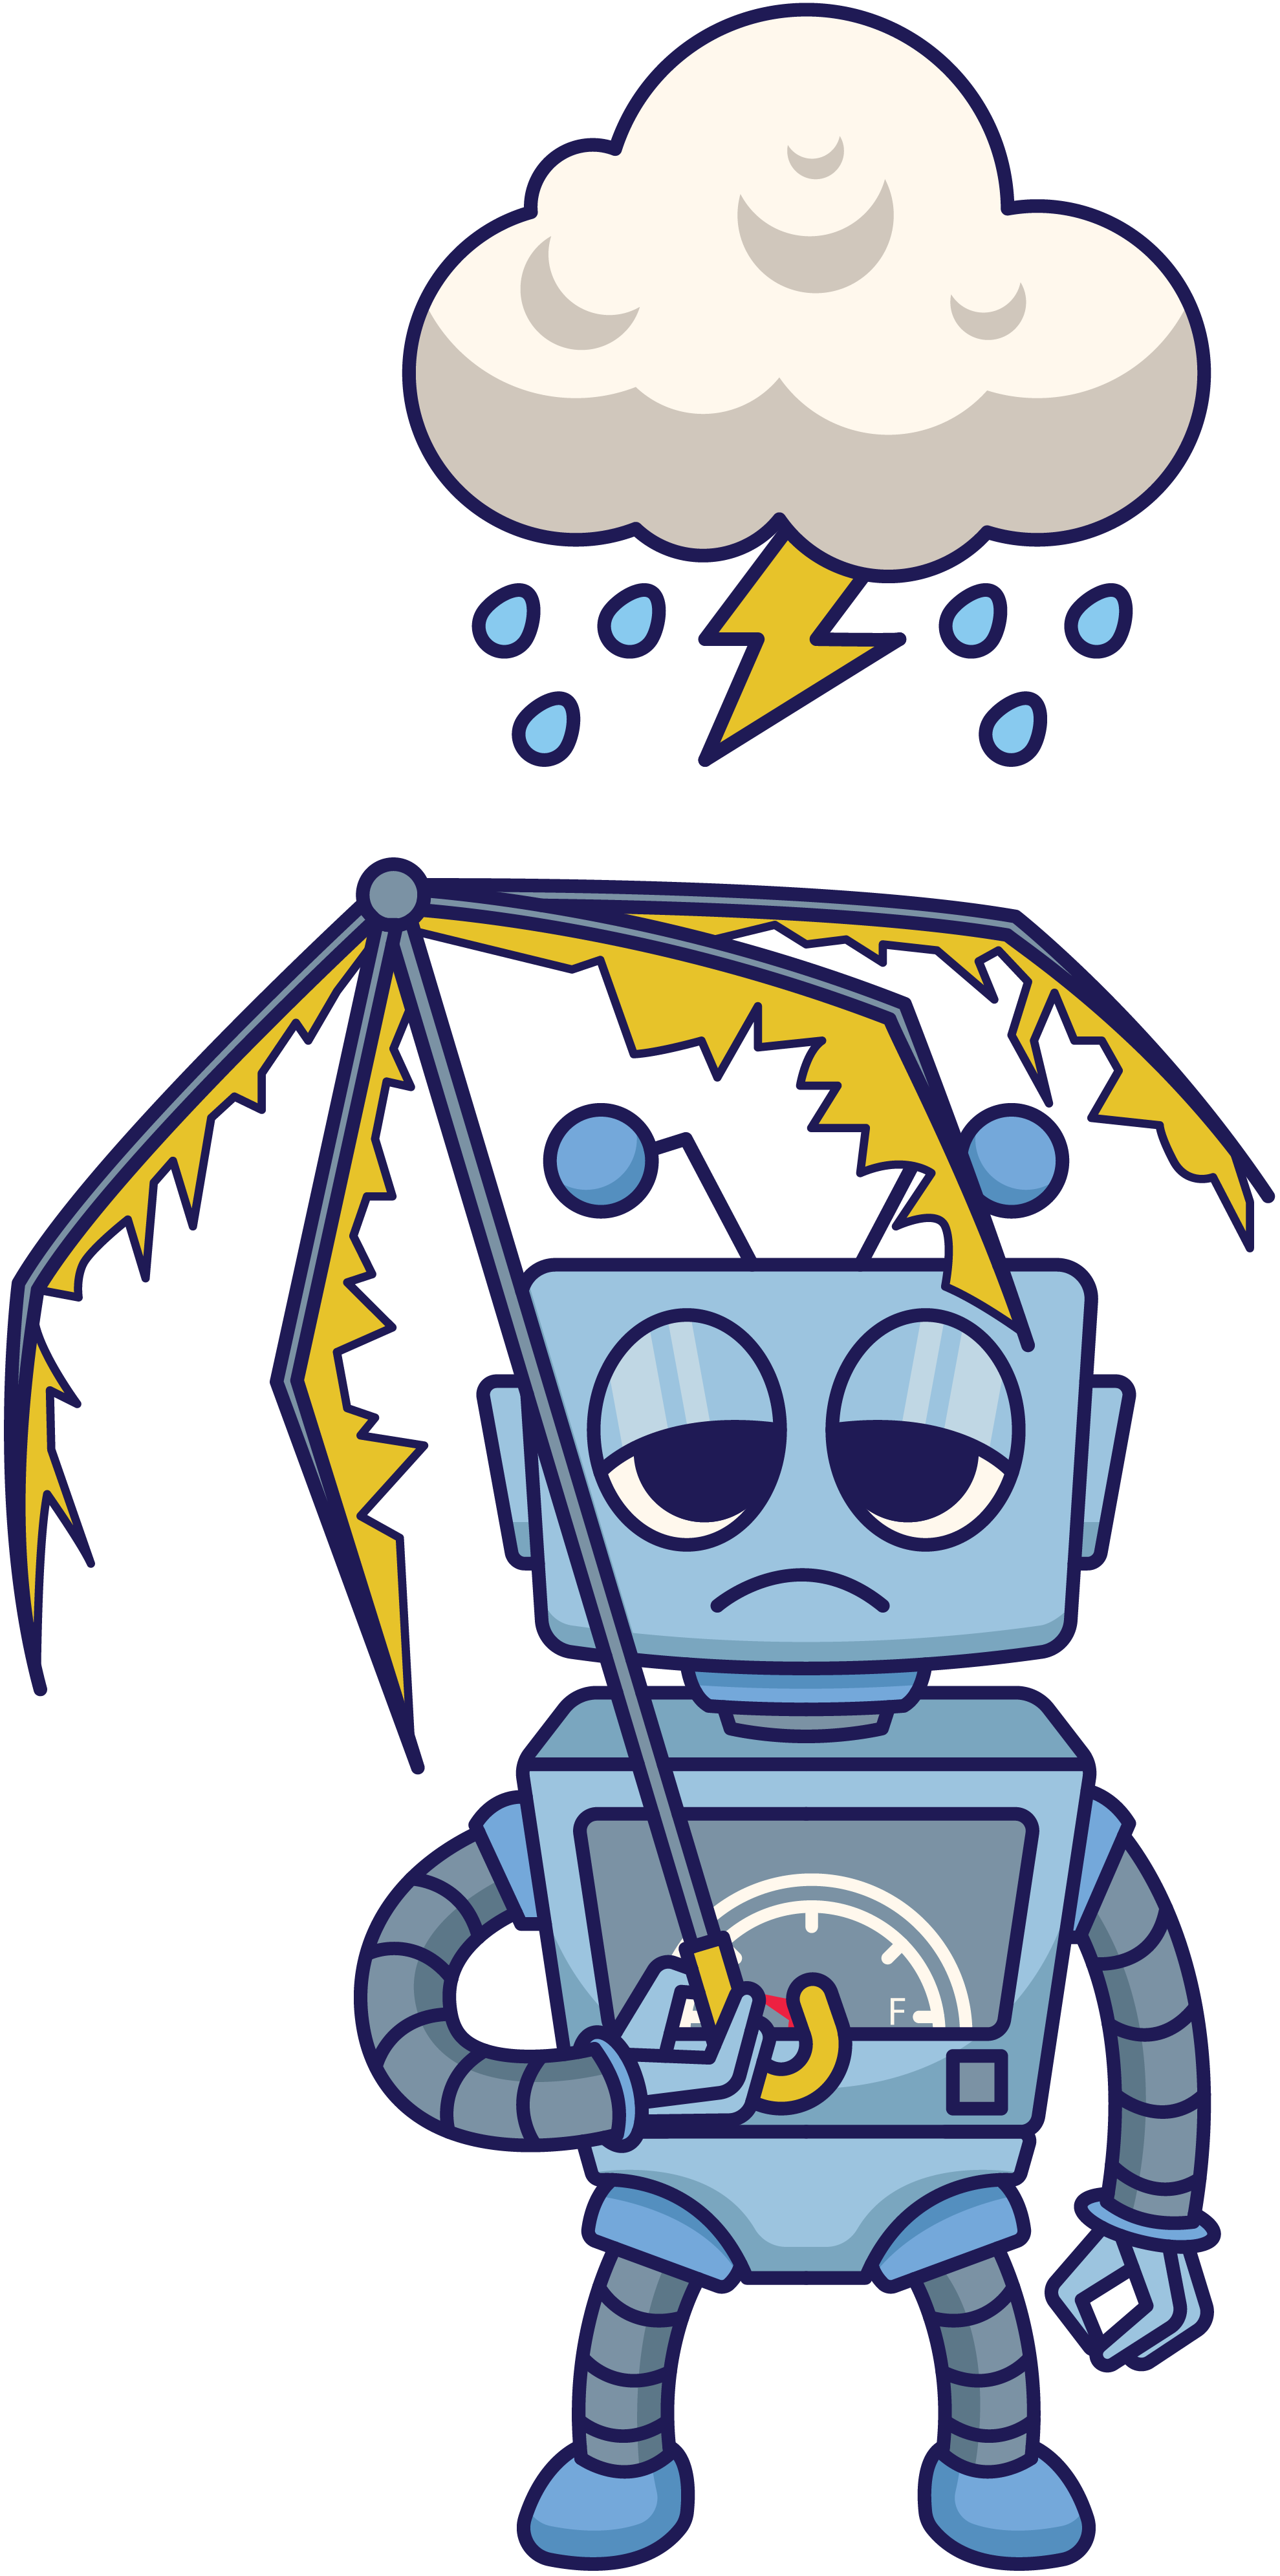 Rainy Robot